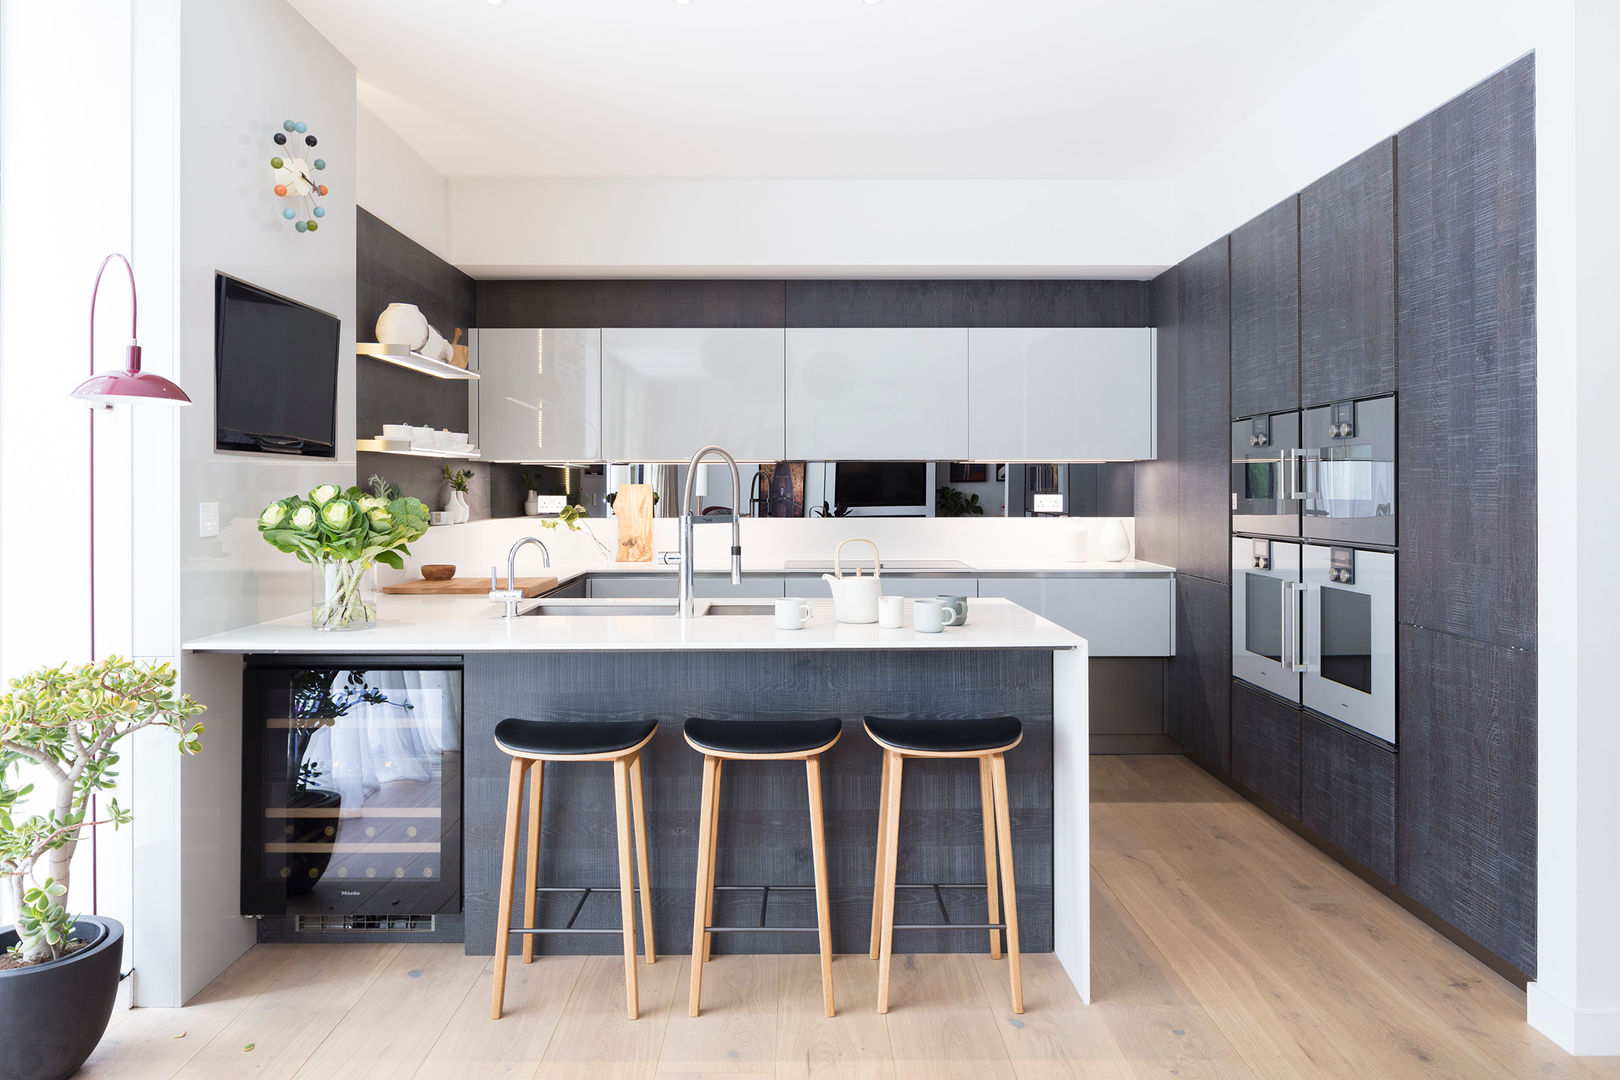 Modern New Home in Hampstead - kitchen bar Black and Milk | Interior Design | London Comedores de estilo moderno kitchen bar,kitchen,bar stool,black kitchen